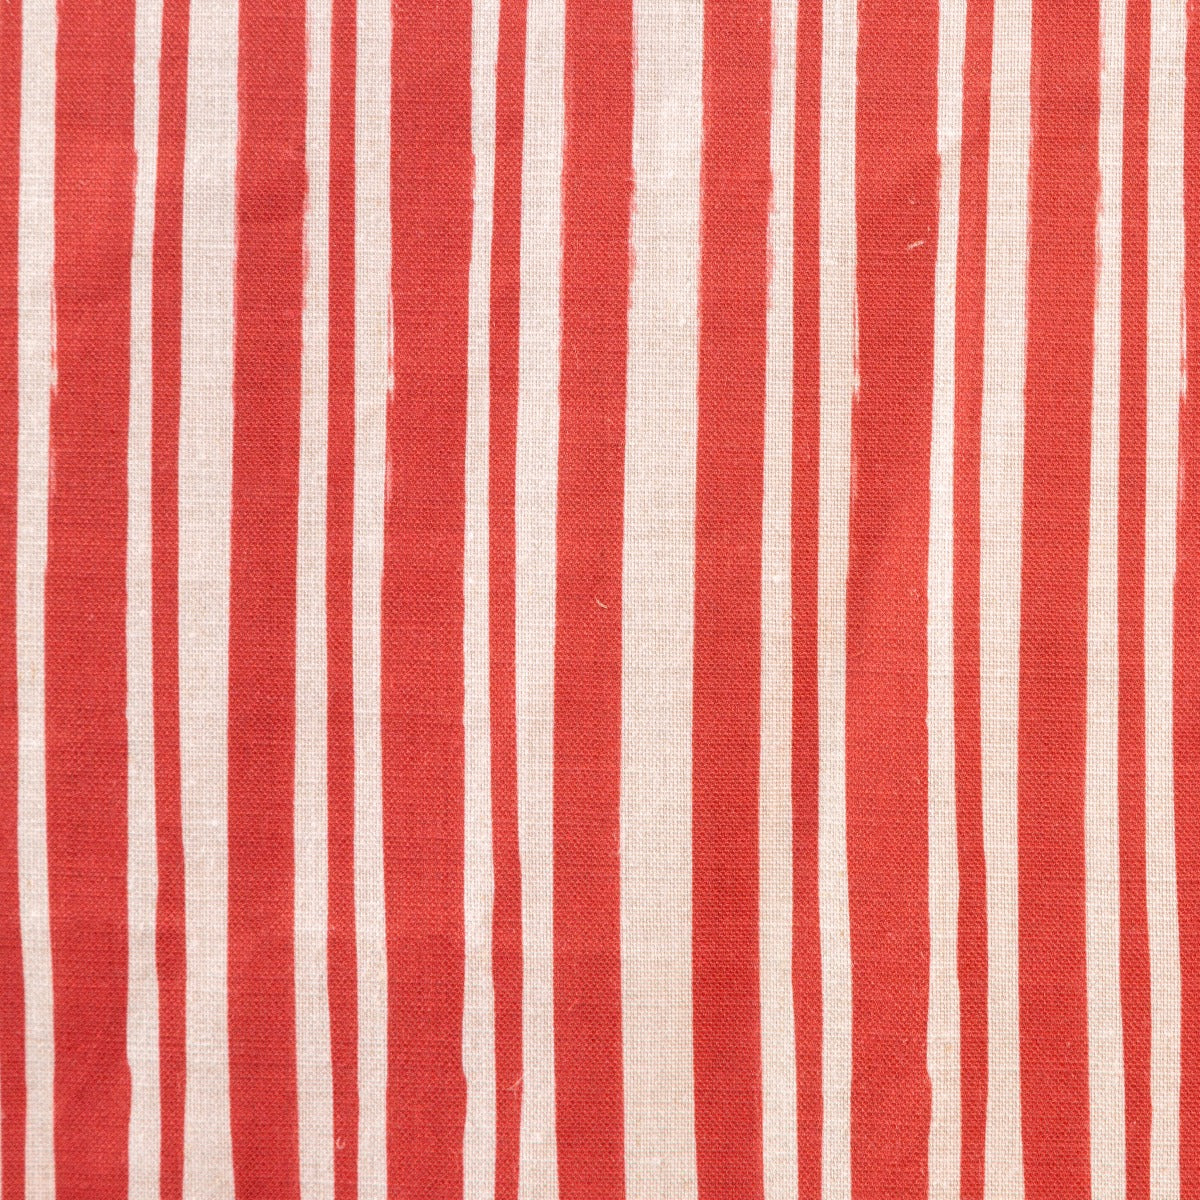 Painterly Stripe Fabric, Natural Linen